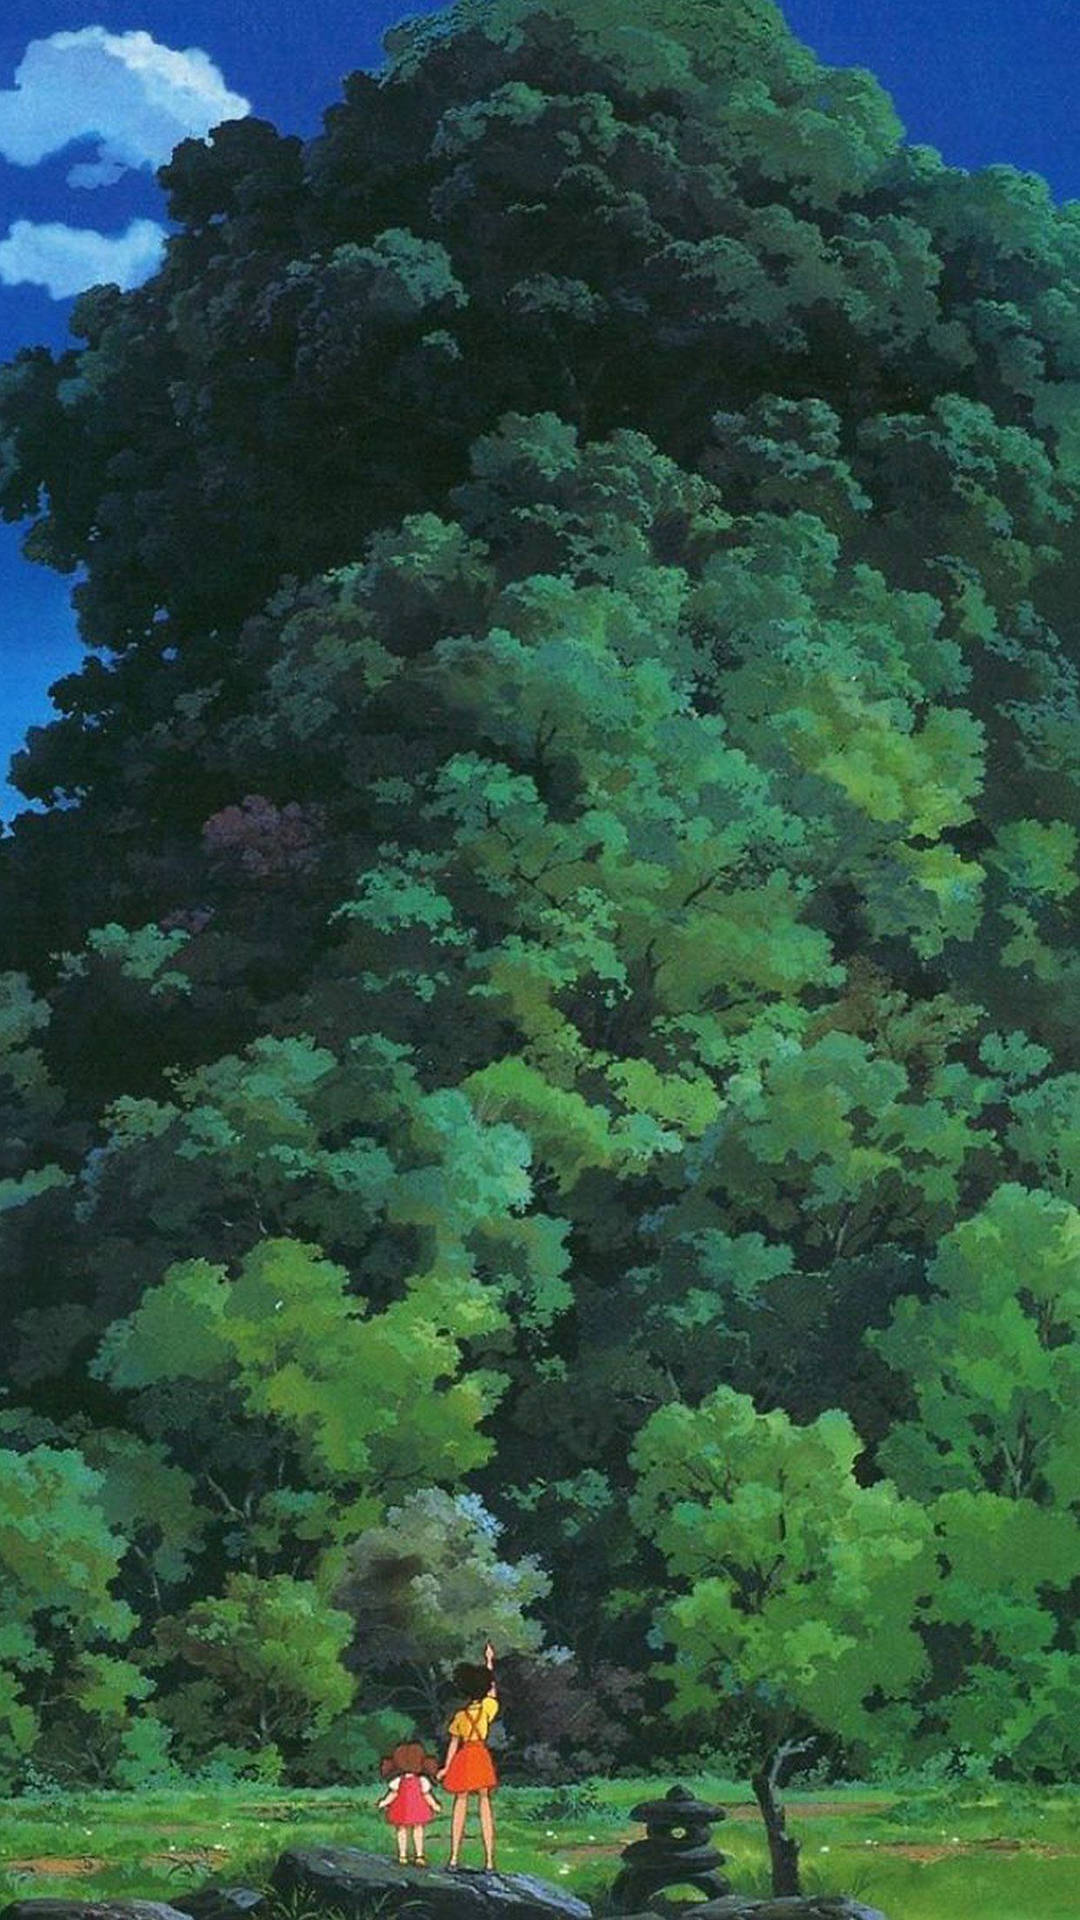 Regalatidei Bellissimi Sfondi Iphone Di Studio Ghibli! Sfondo